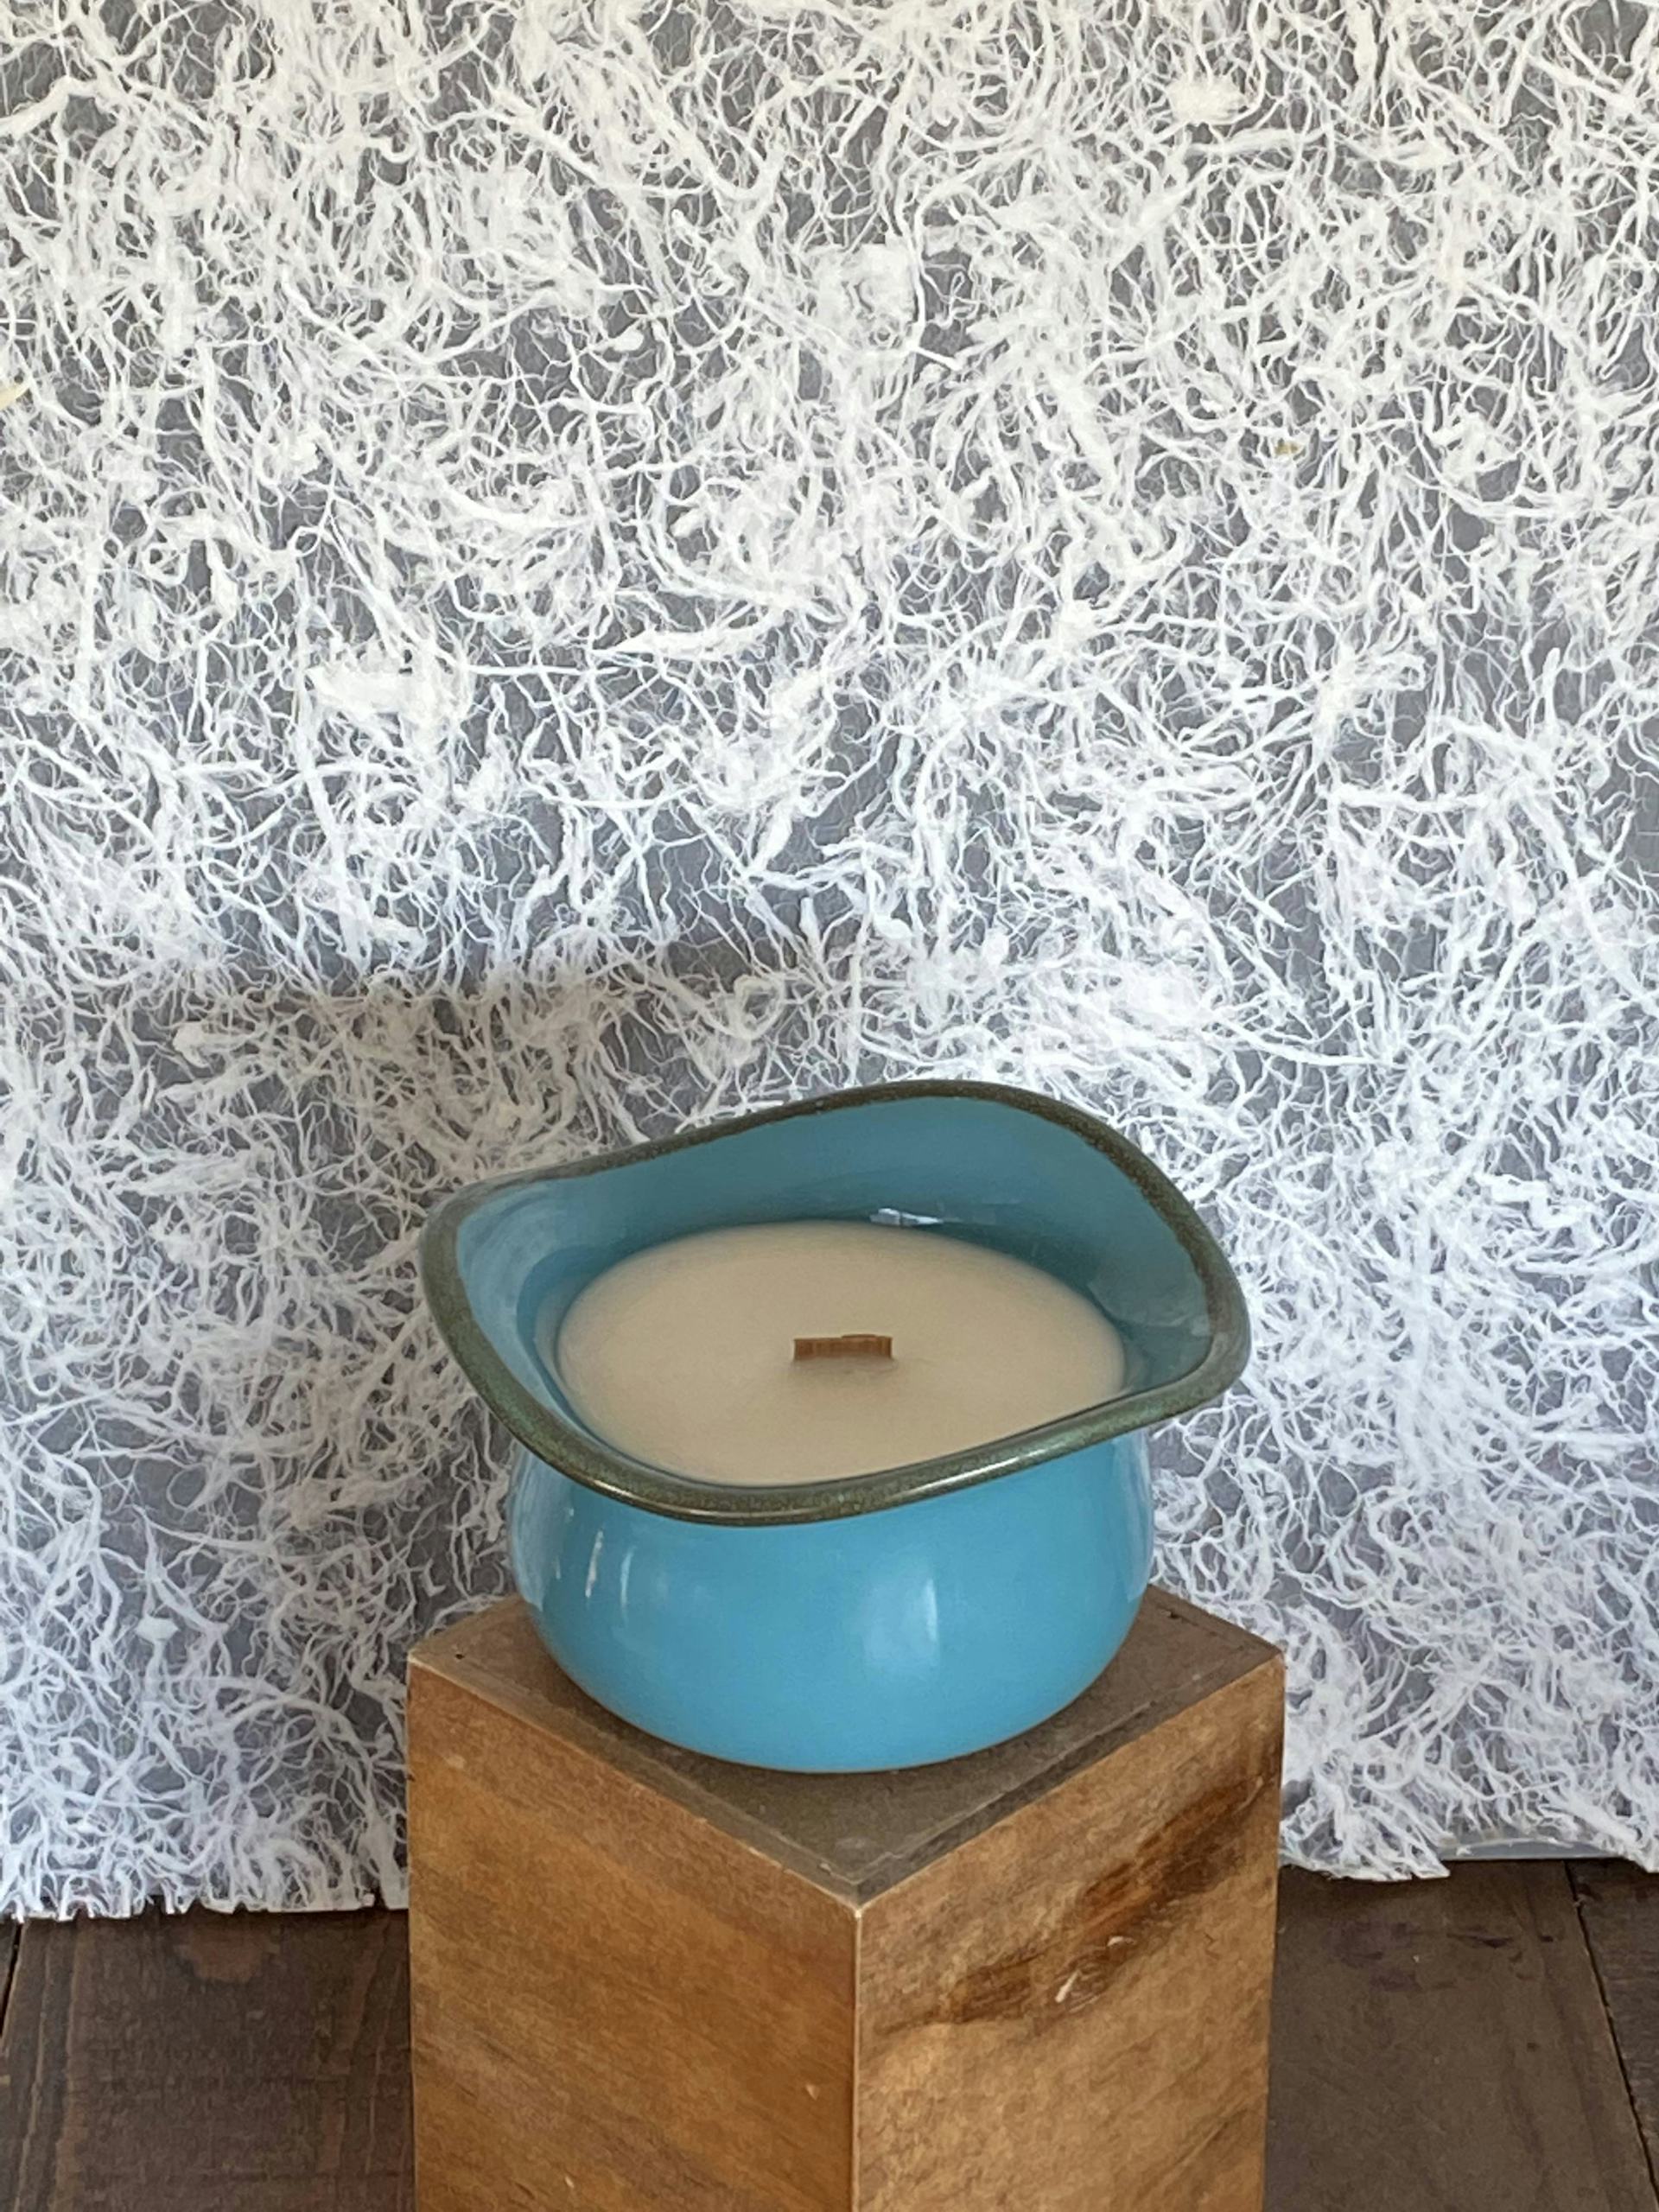 Product Image: Seasonal Summer Candle - Small